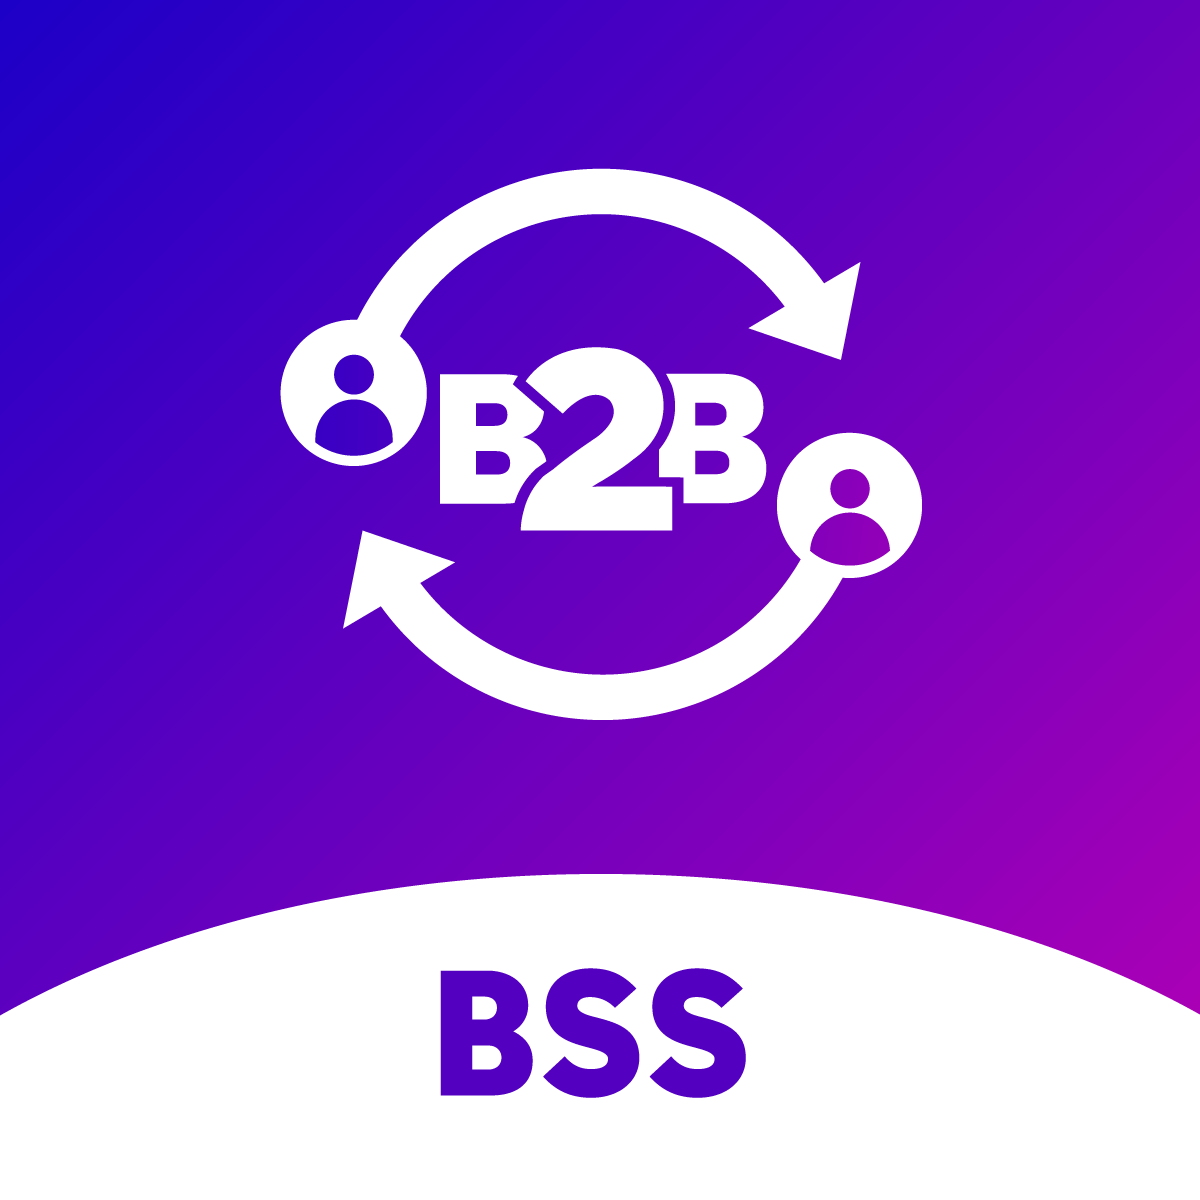 BSS: B2B Portal, Quote, Net 30